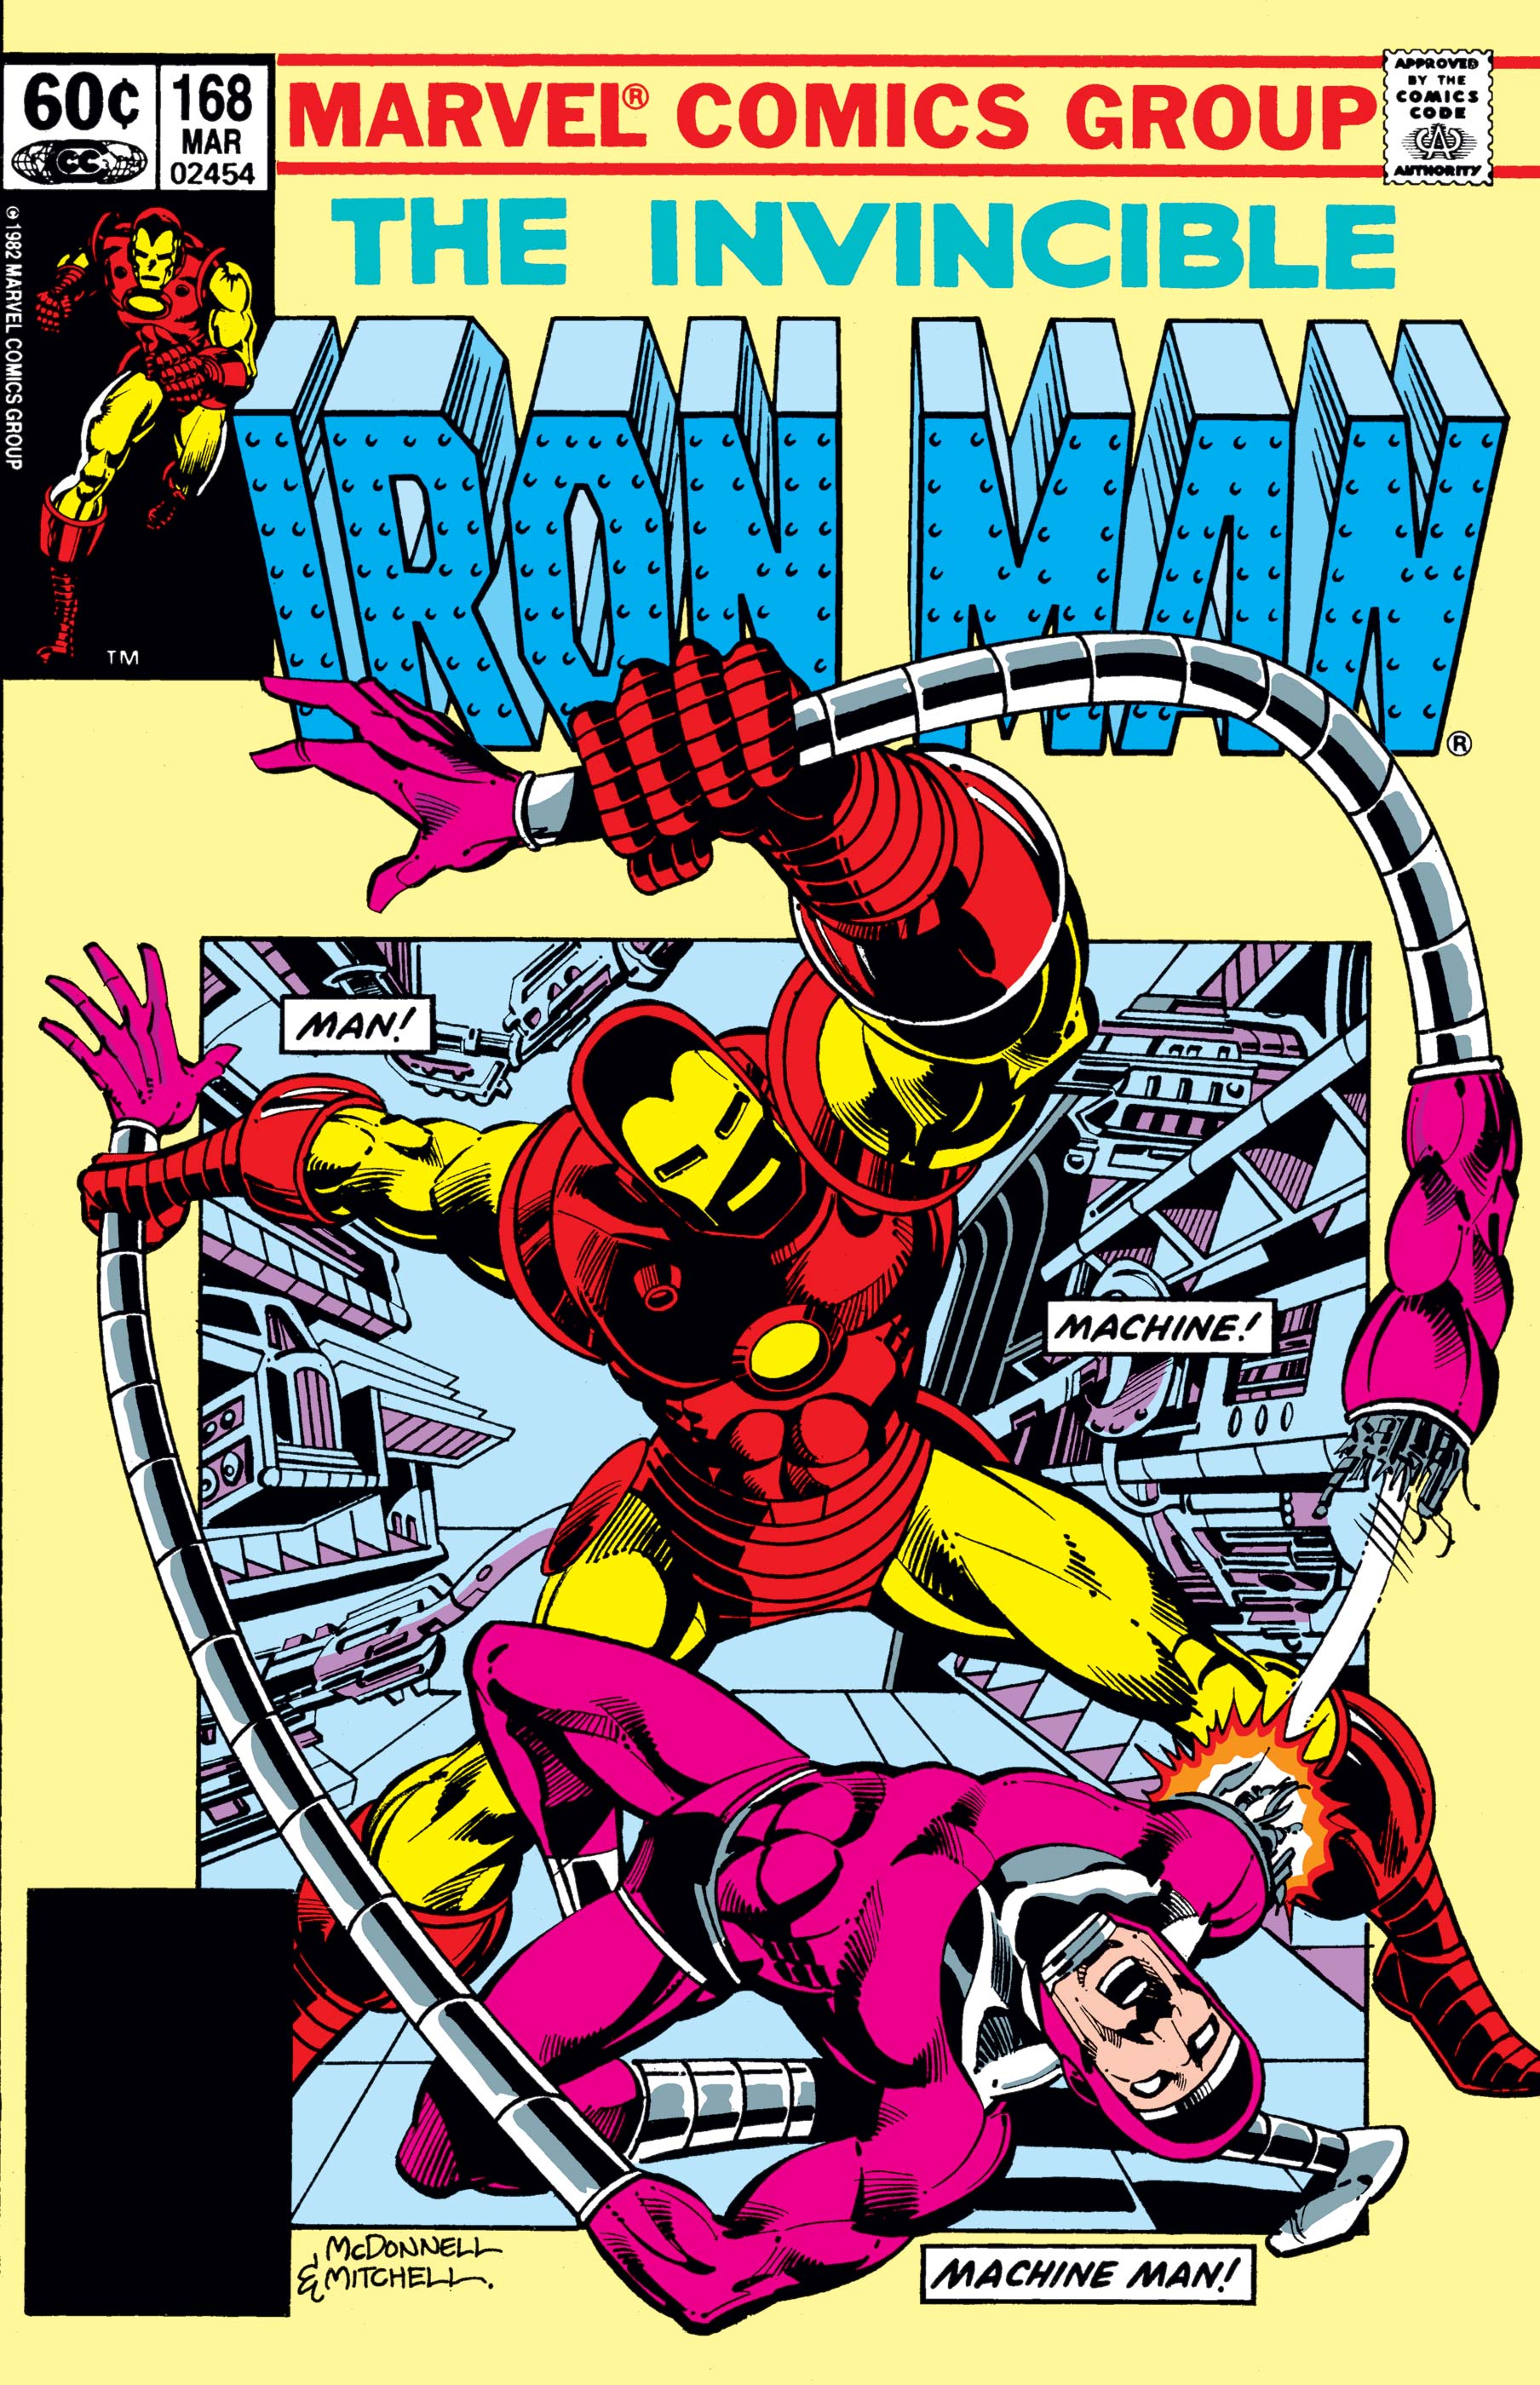 Iron Man (1968) #168